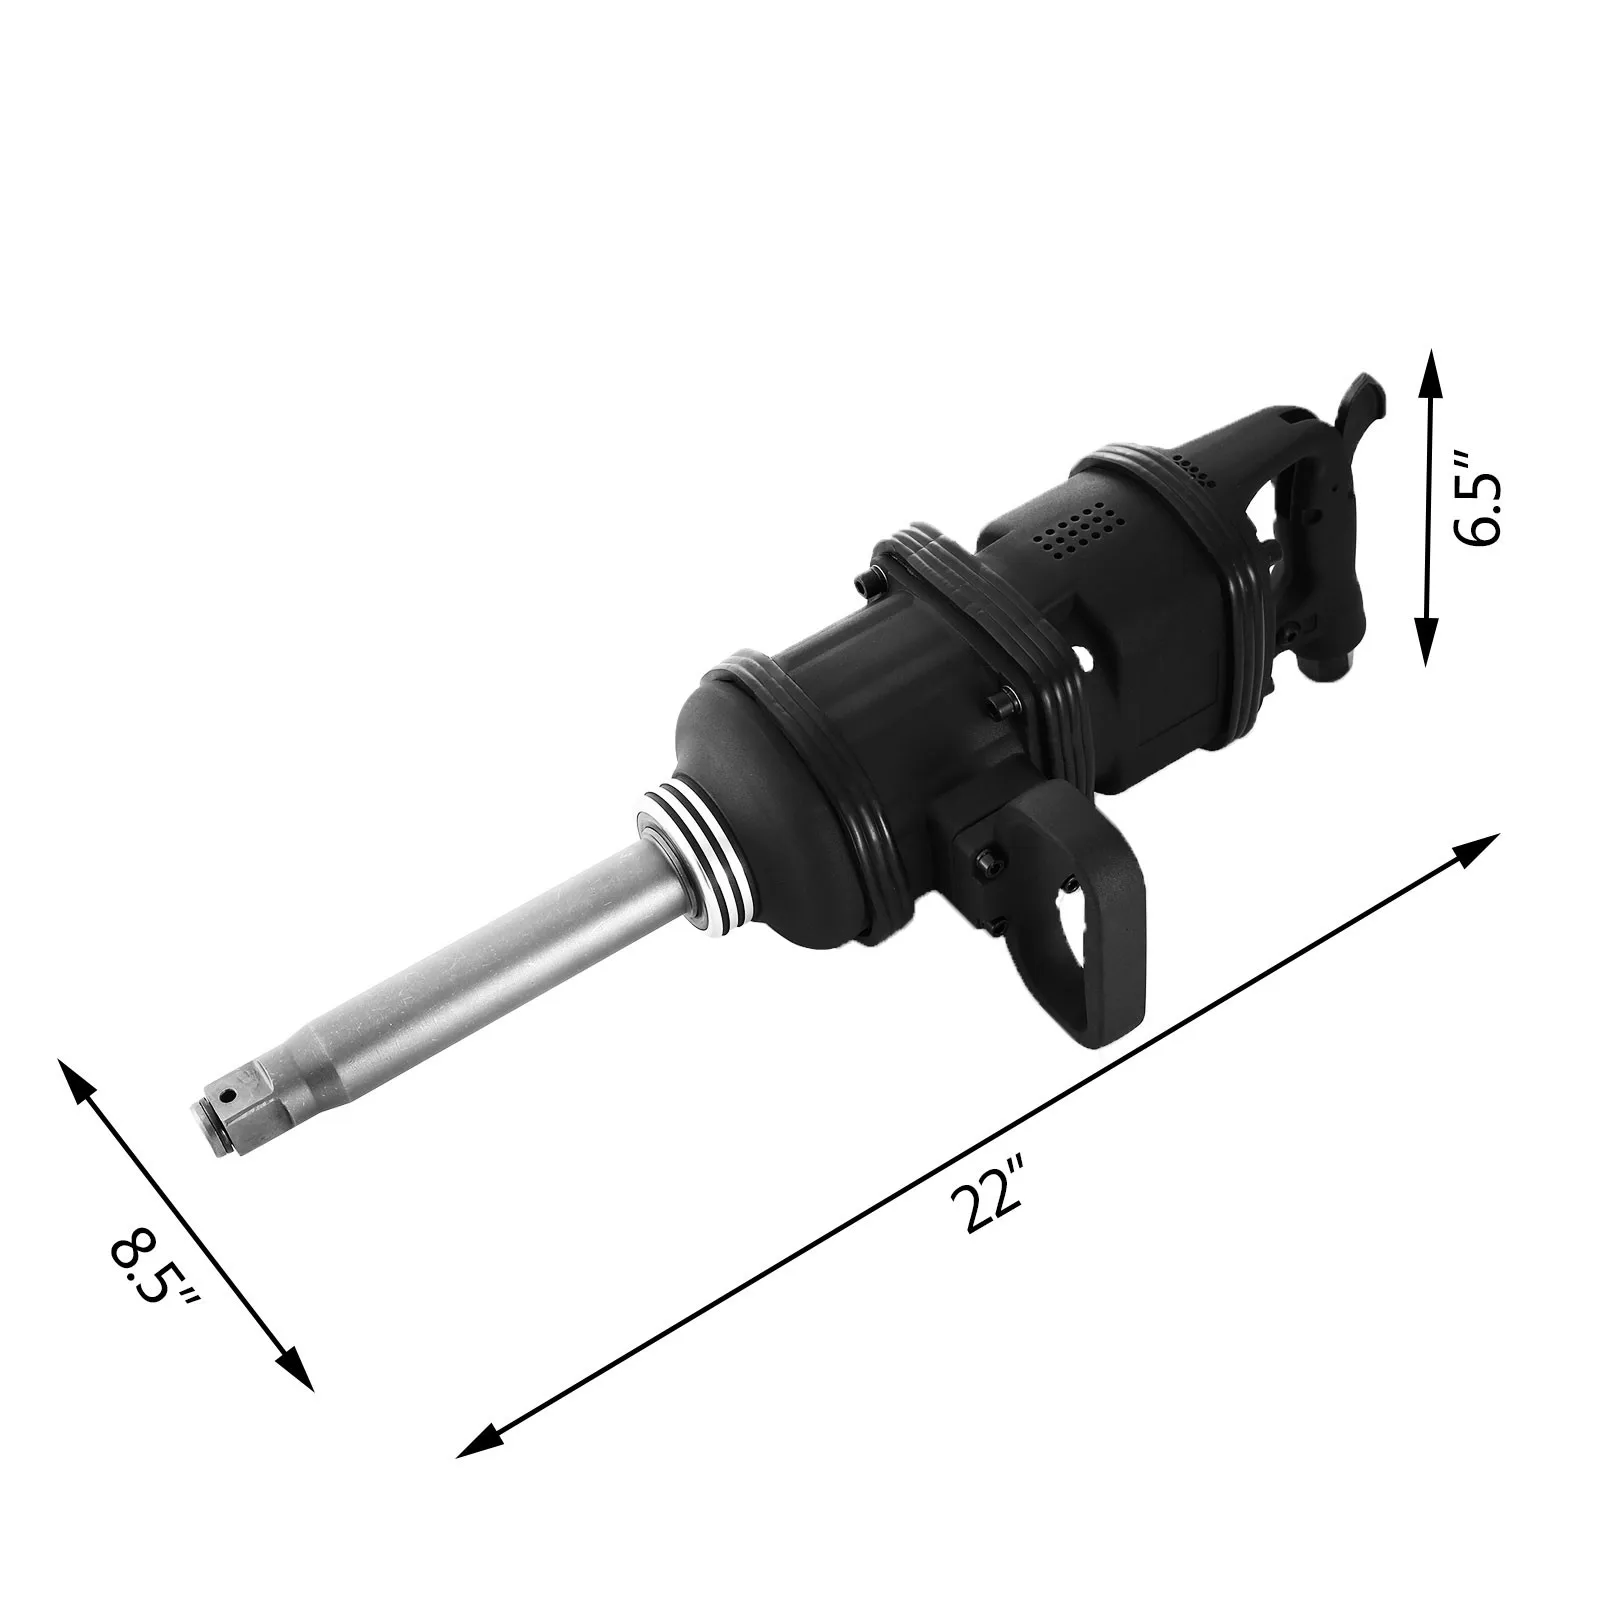 1" Drive Air Impact Wrench Gun 6800Nm Long Shank 1Inch Drive Hammer Tool POPULAR 